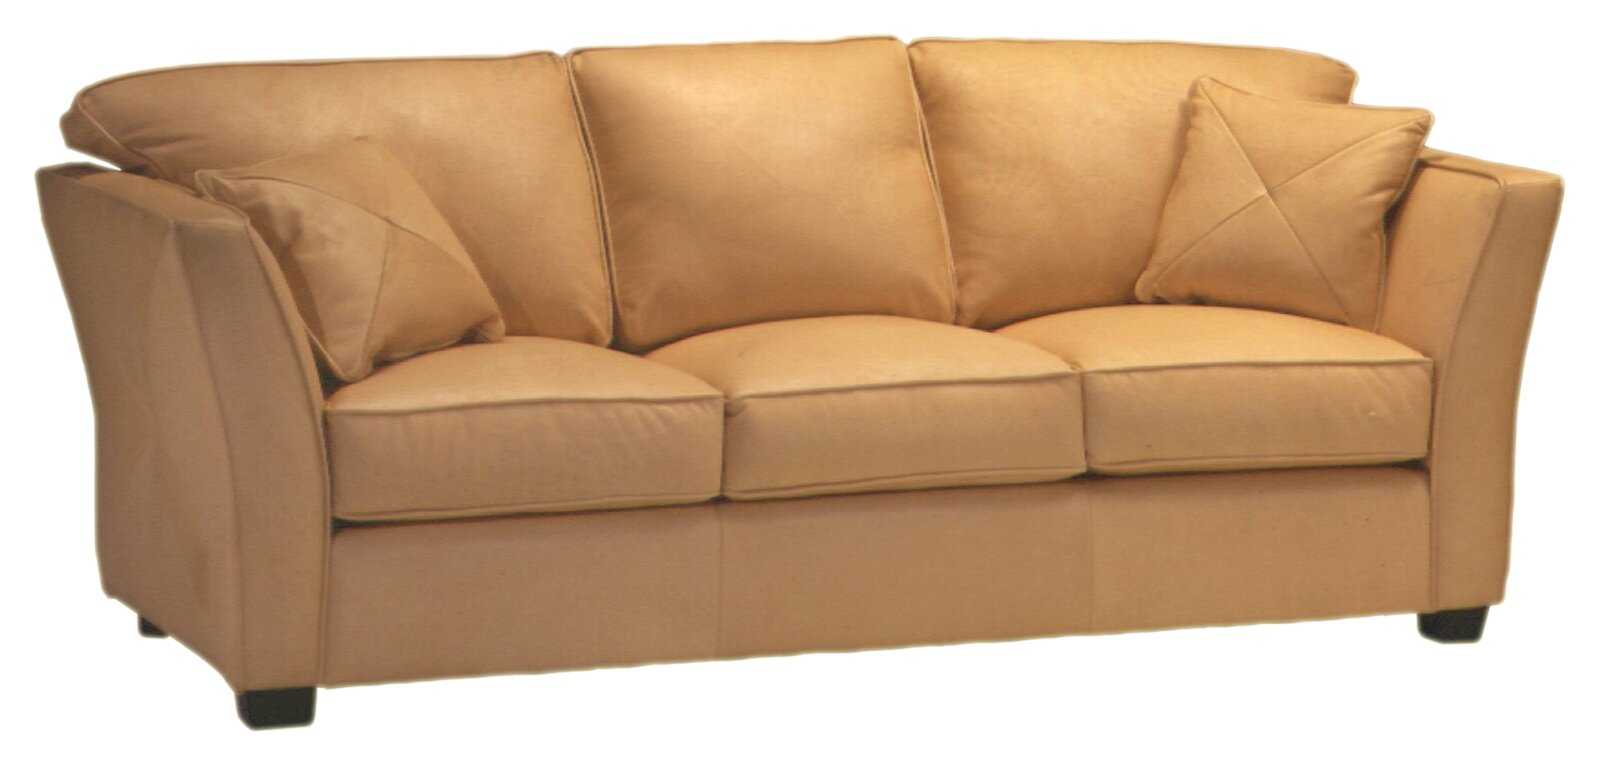 wayfair leather sofa reviews